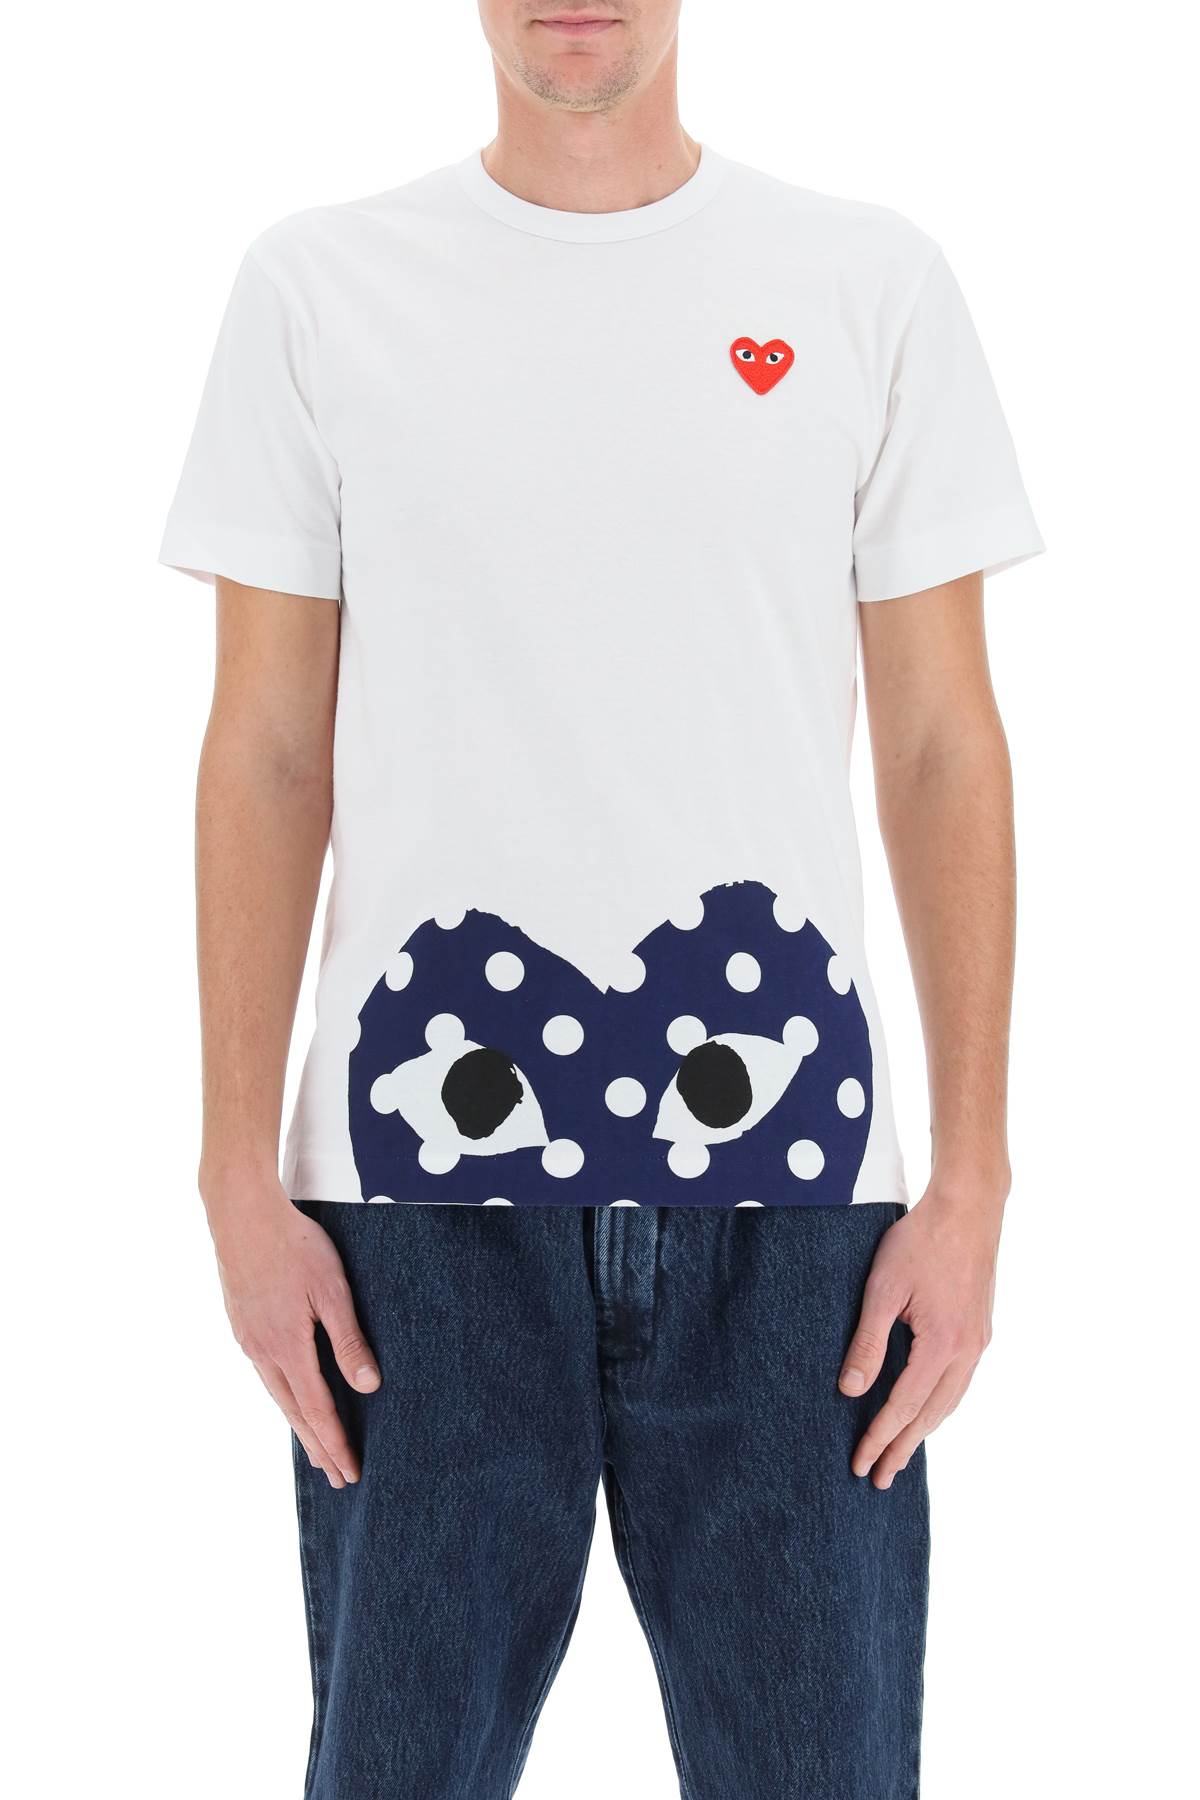 Comme des garcons play heart polka dot t-shirt-1